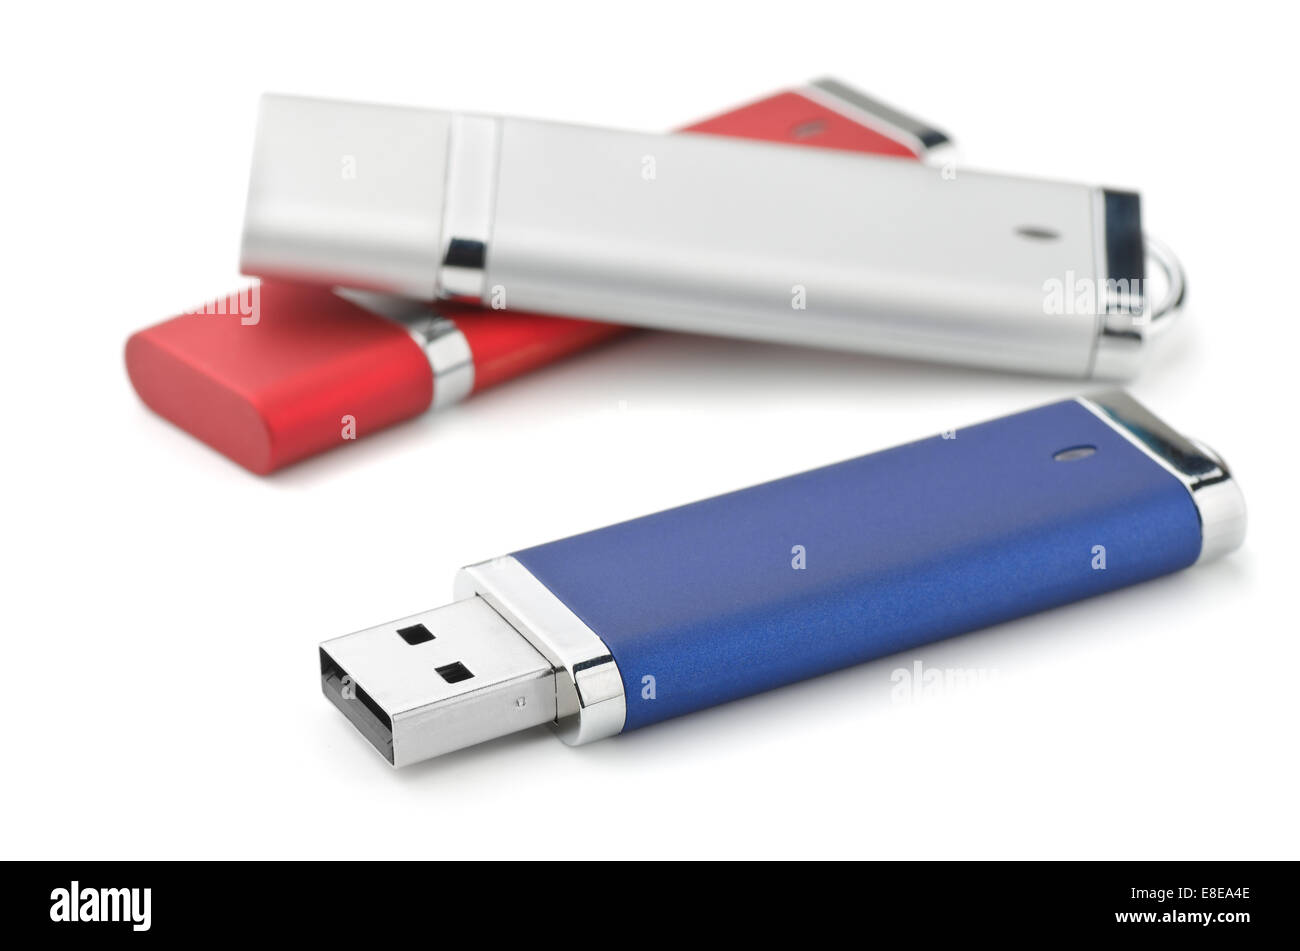 Three USB flash drives isolated on white Stock Photo